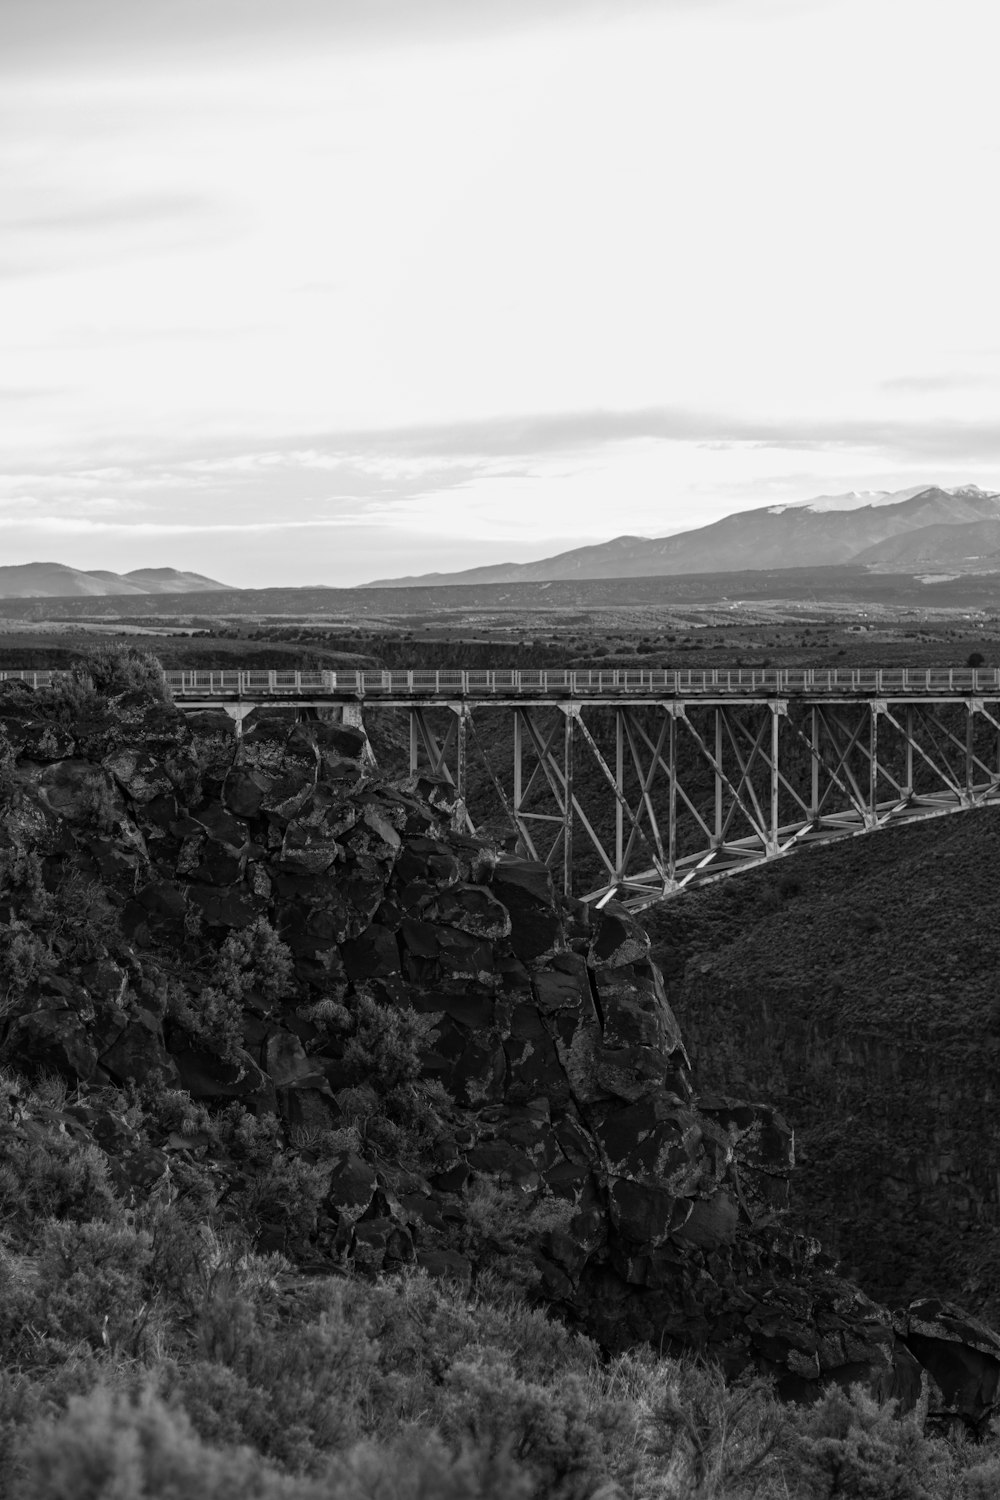 a black and white photo of a train crossing a bridge